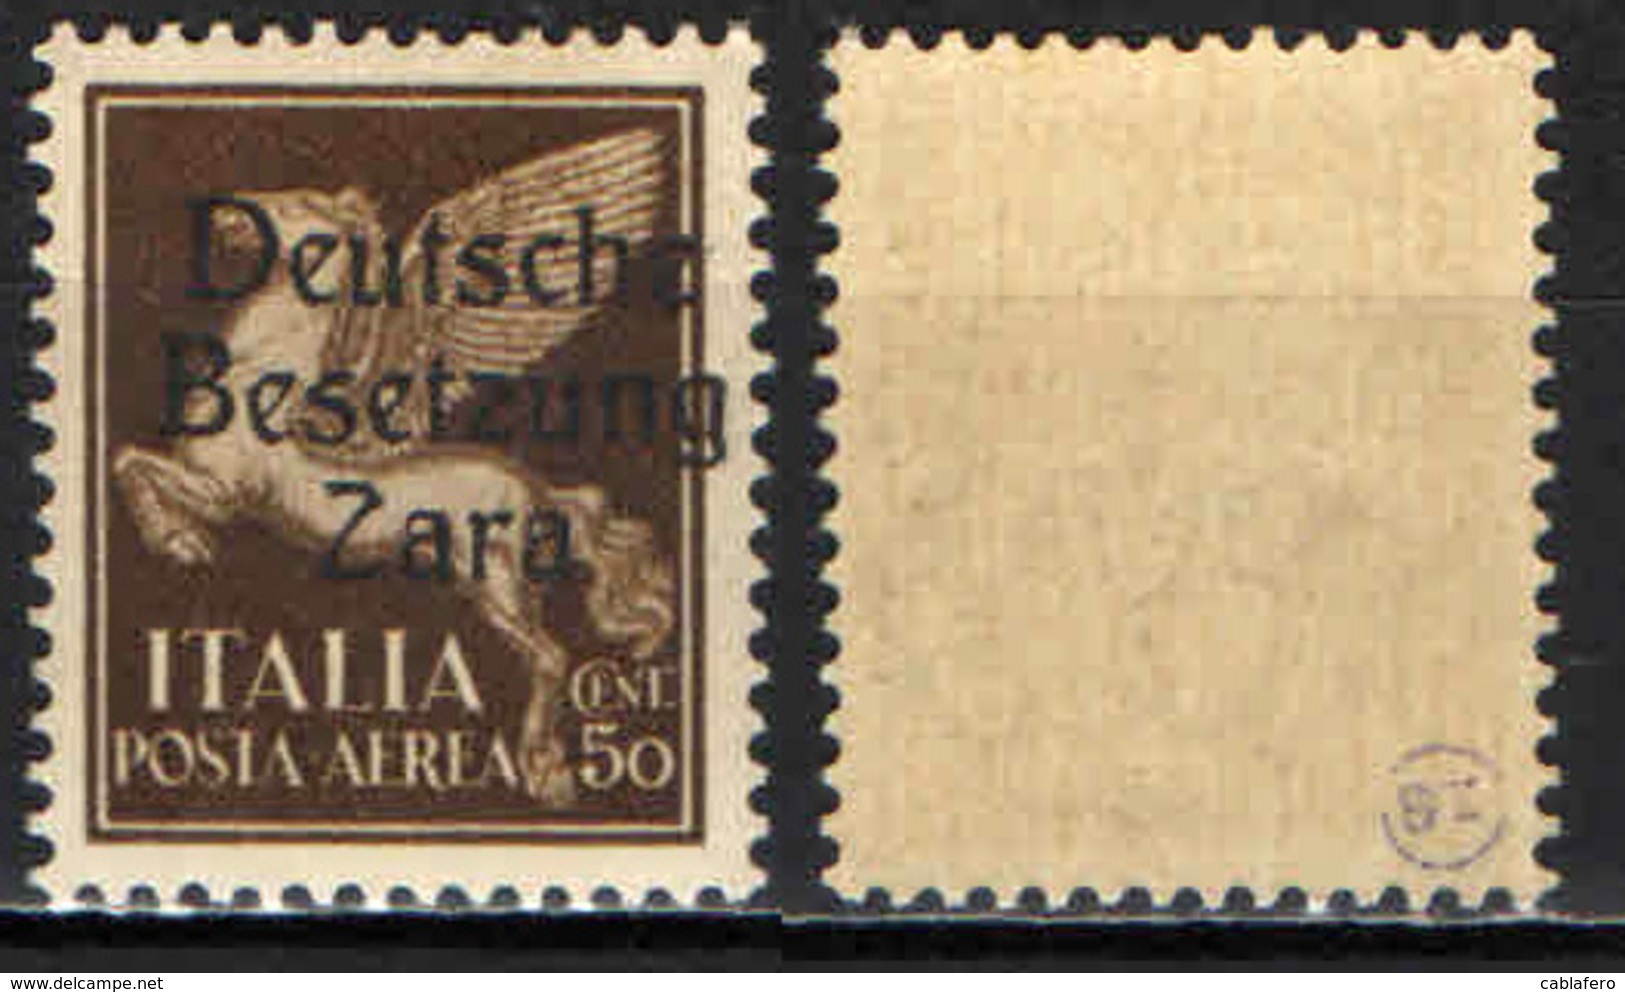 ITALIA - OCCUPAZIONE TEDESCA - ZARA - 1943 - SOVRASTAMPA - 50 CENT. - MNH - Duitse Bez.: Zara